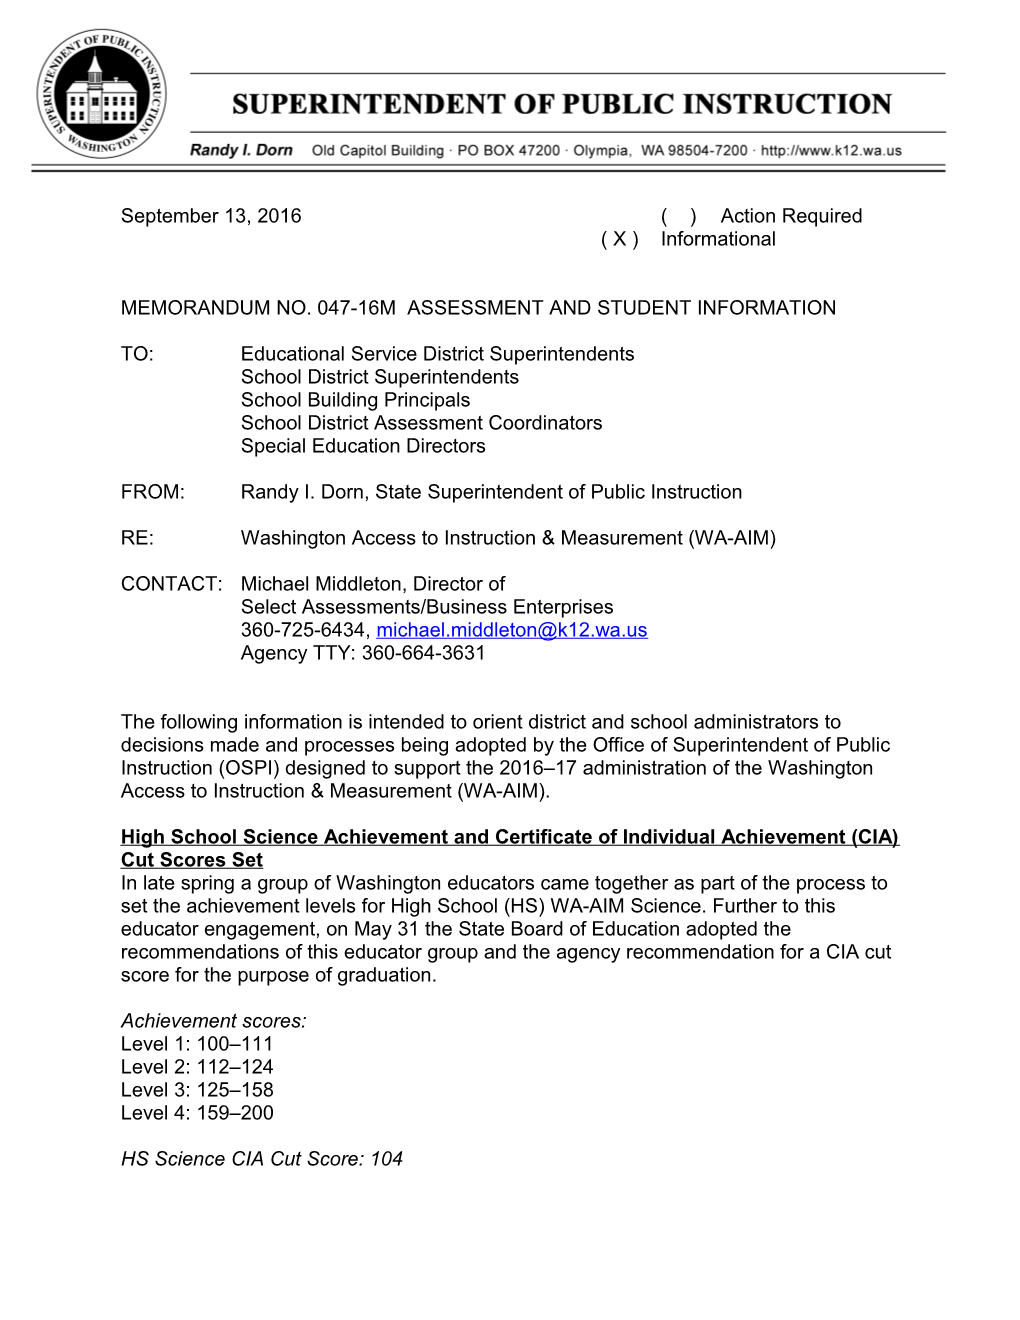 Memorandum No. 047-16M Assessment and Student Information